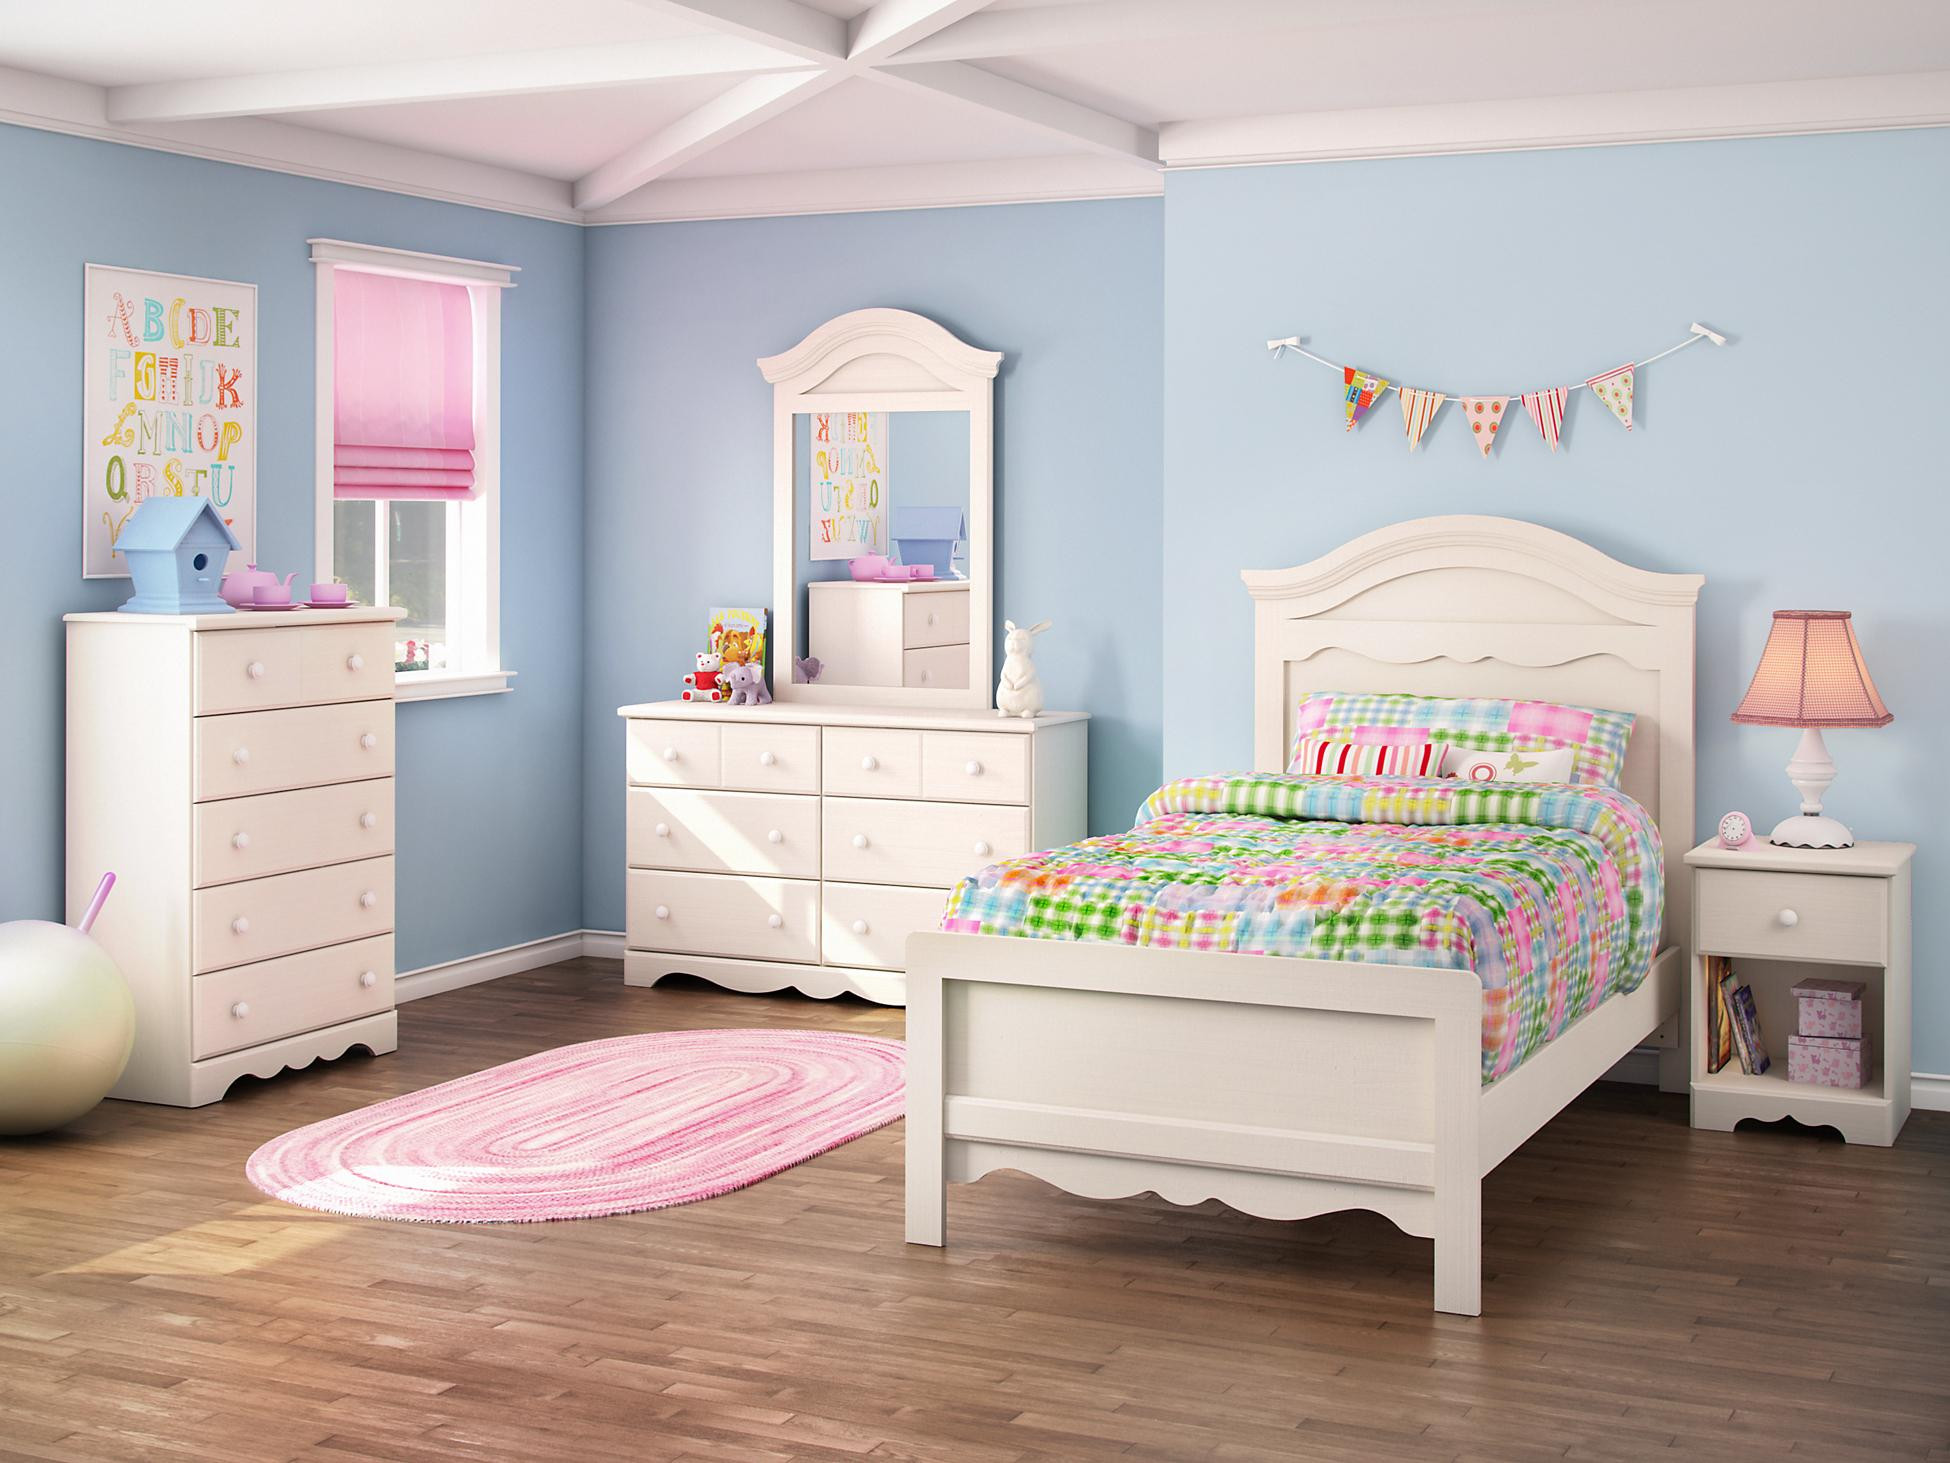 Toddler Girl Bedroom Furniture
 Bedroom Sweet Bedroom Sets Teenage Decorating Ideas